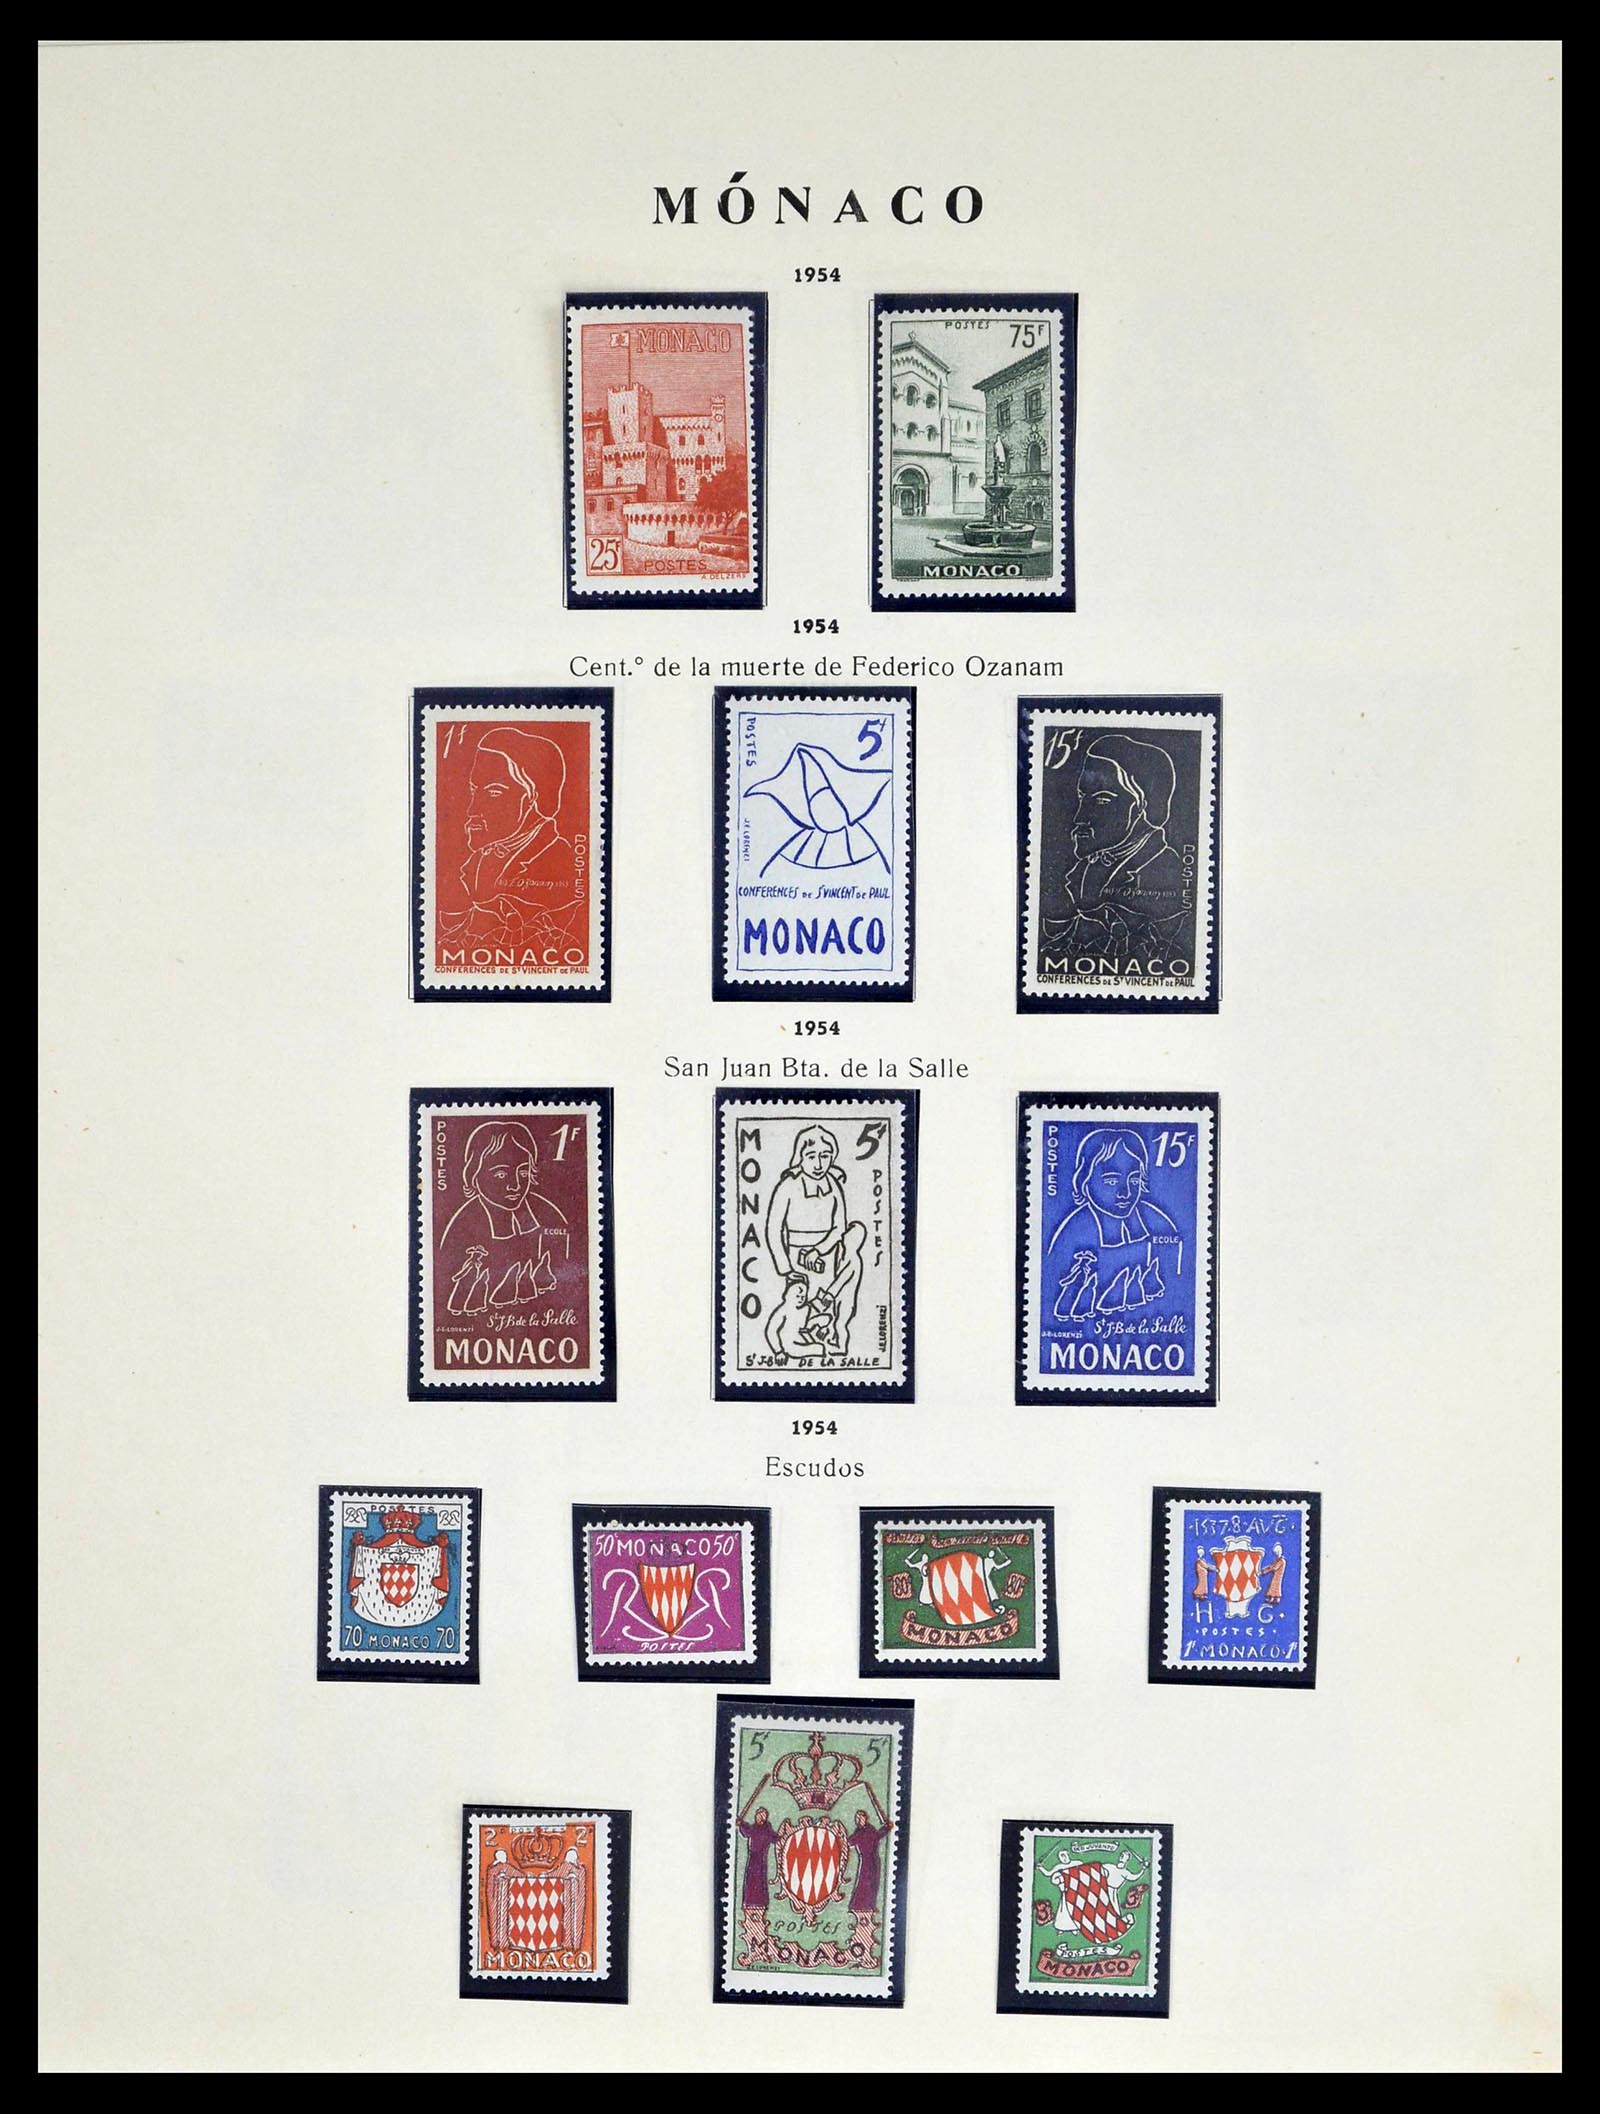 39082 0025 - Stamp collection 39082 Monaco 1885-1964.